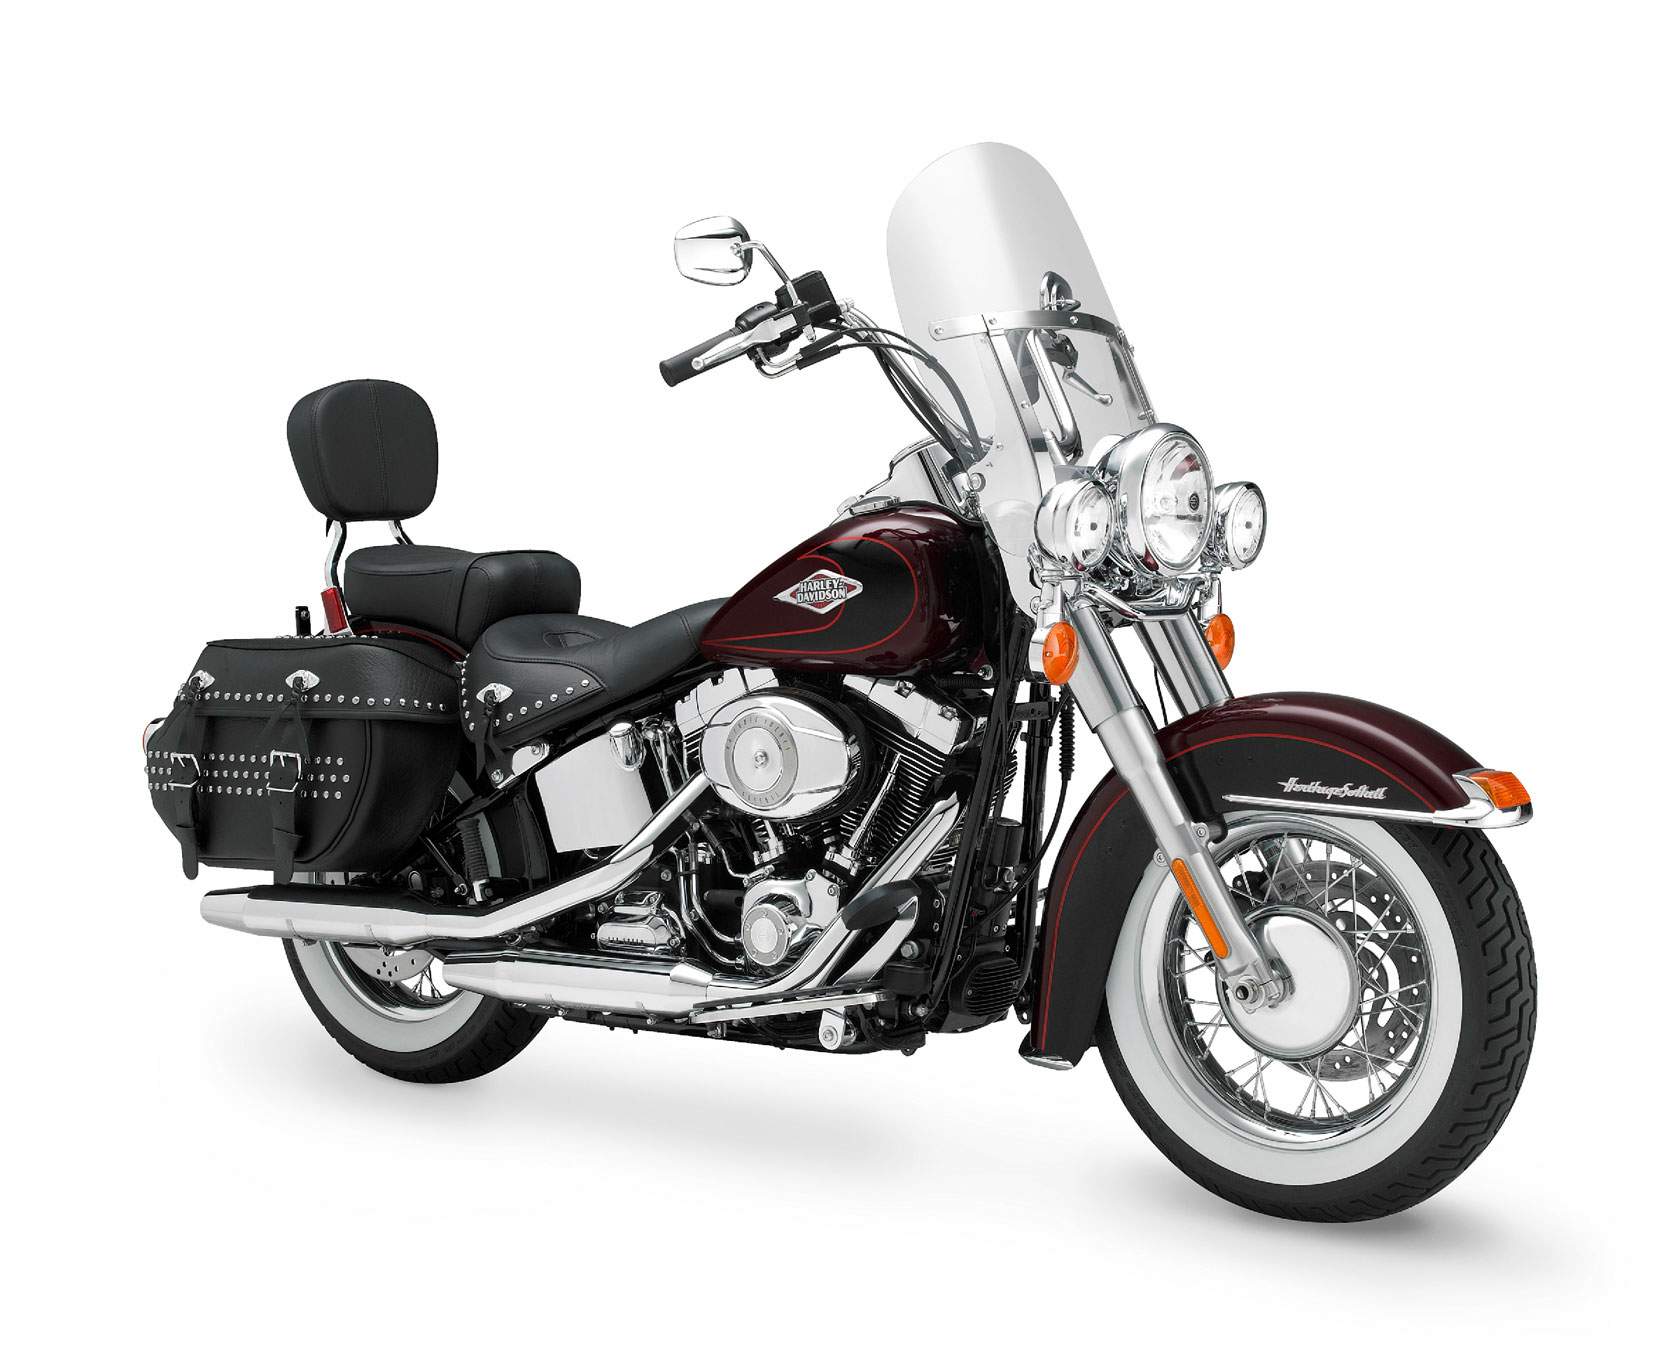 Harley-Davidson Harley Davidson FLSTC Heritage Softail Classic (2011) especificaciones técnicas